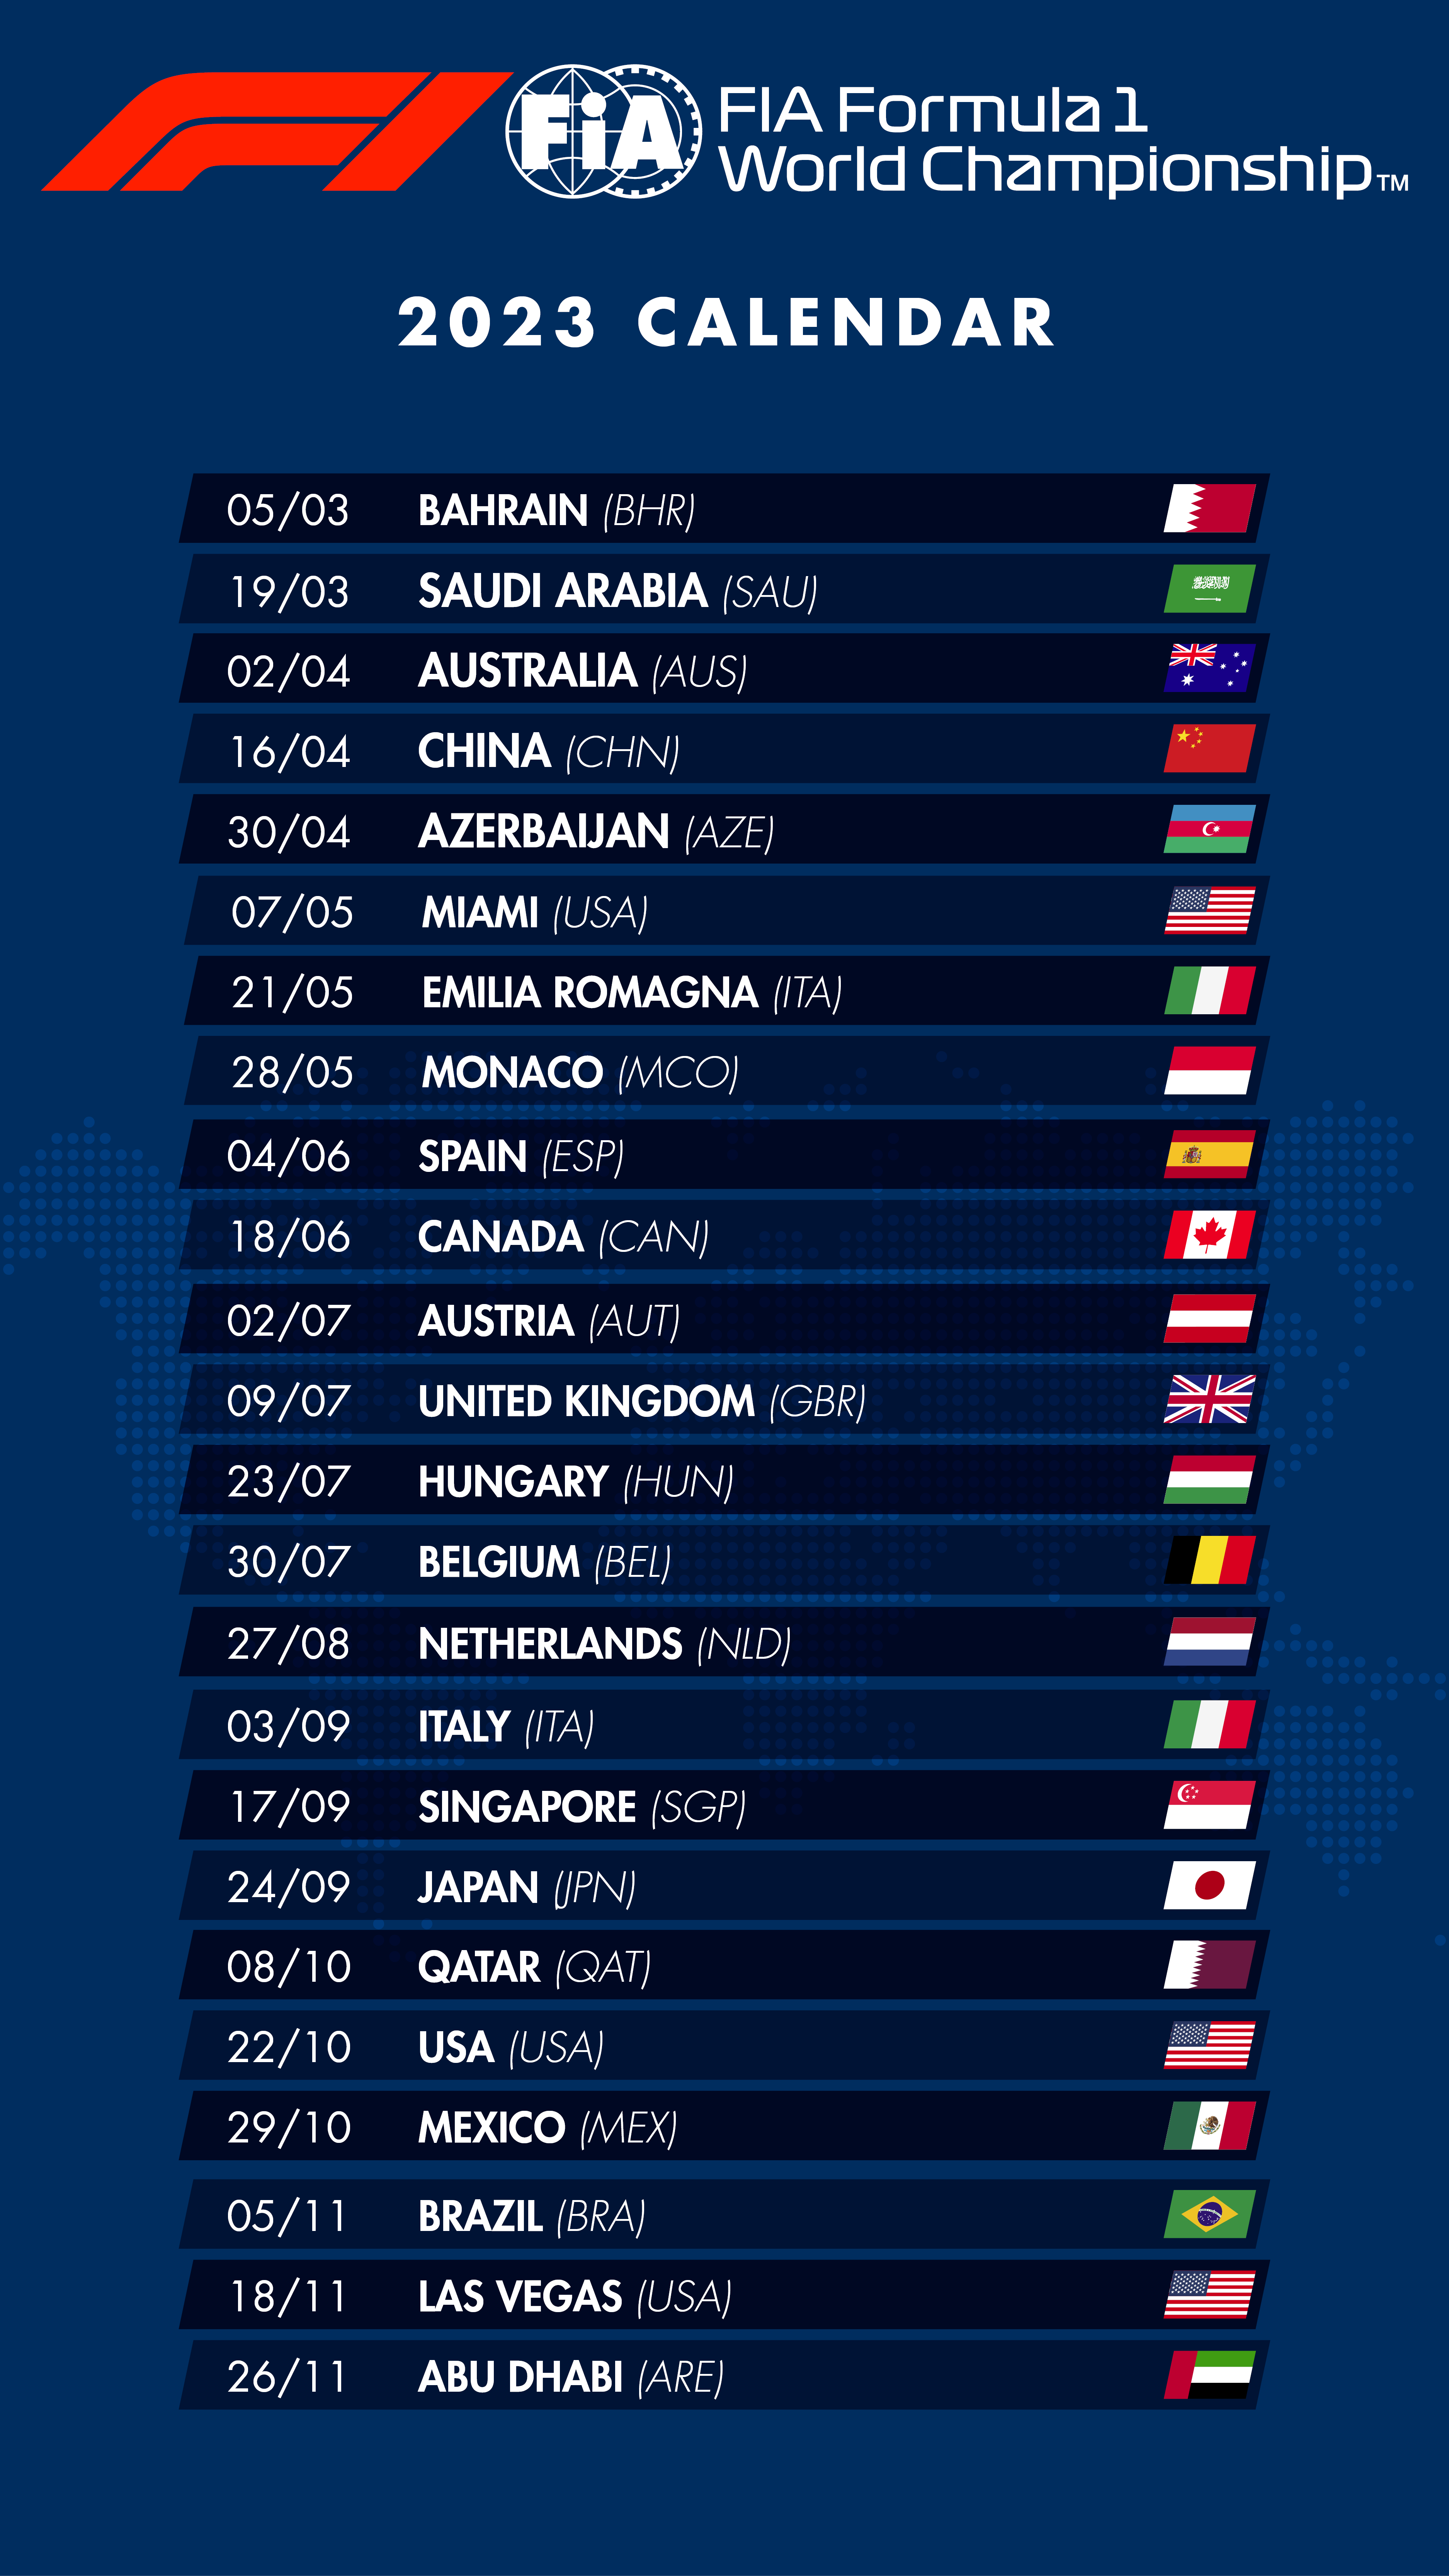 2023-fia-formula-one-world-championship-calendar-approved-by-wmsc